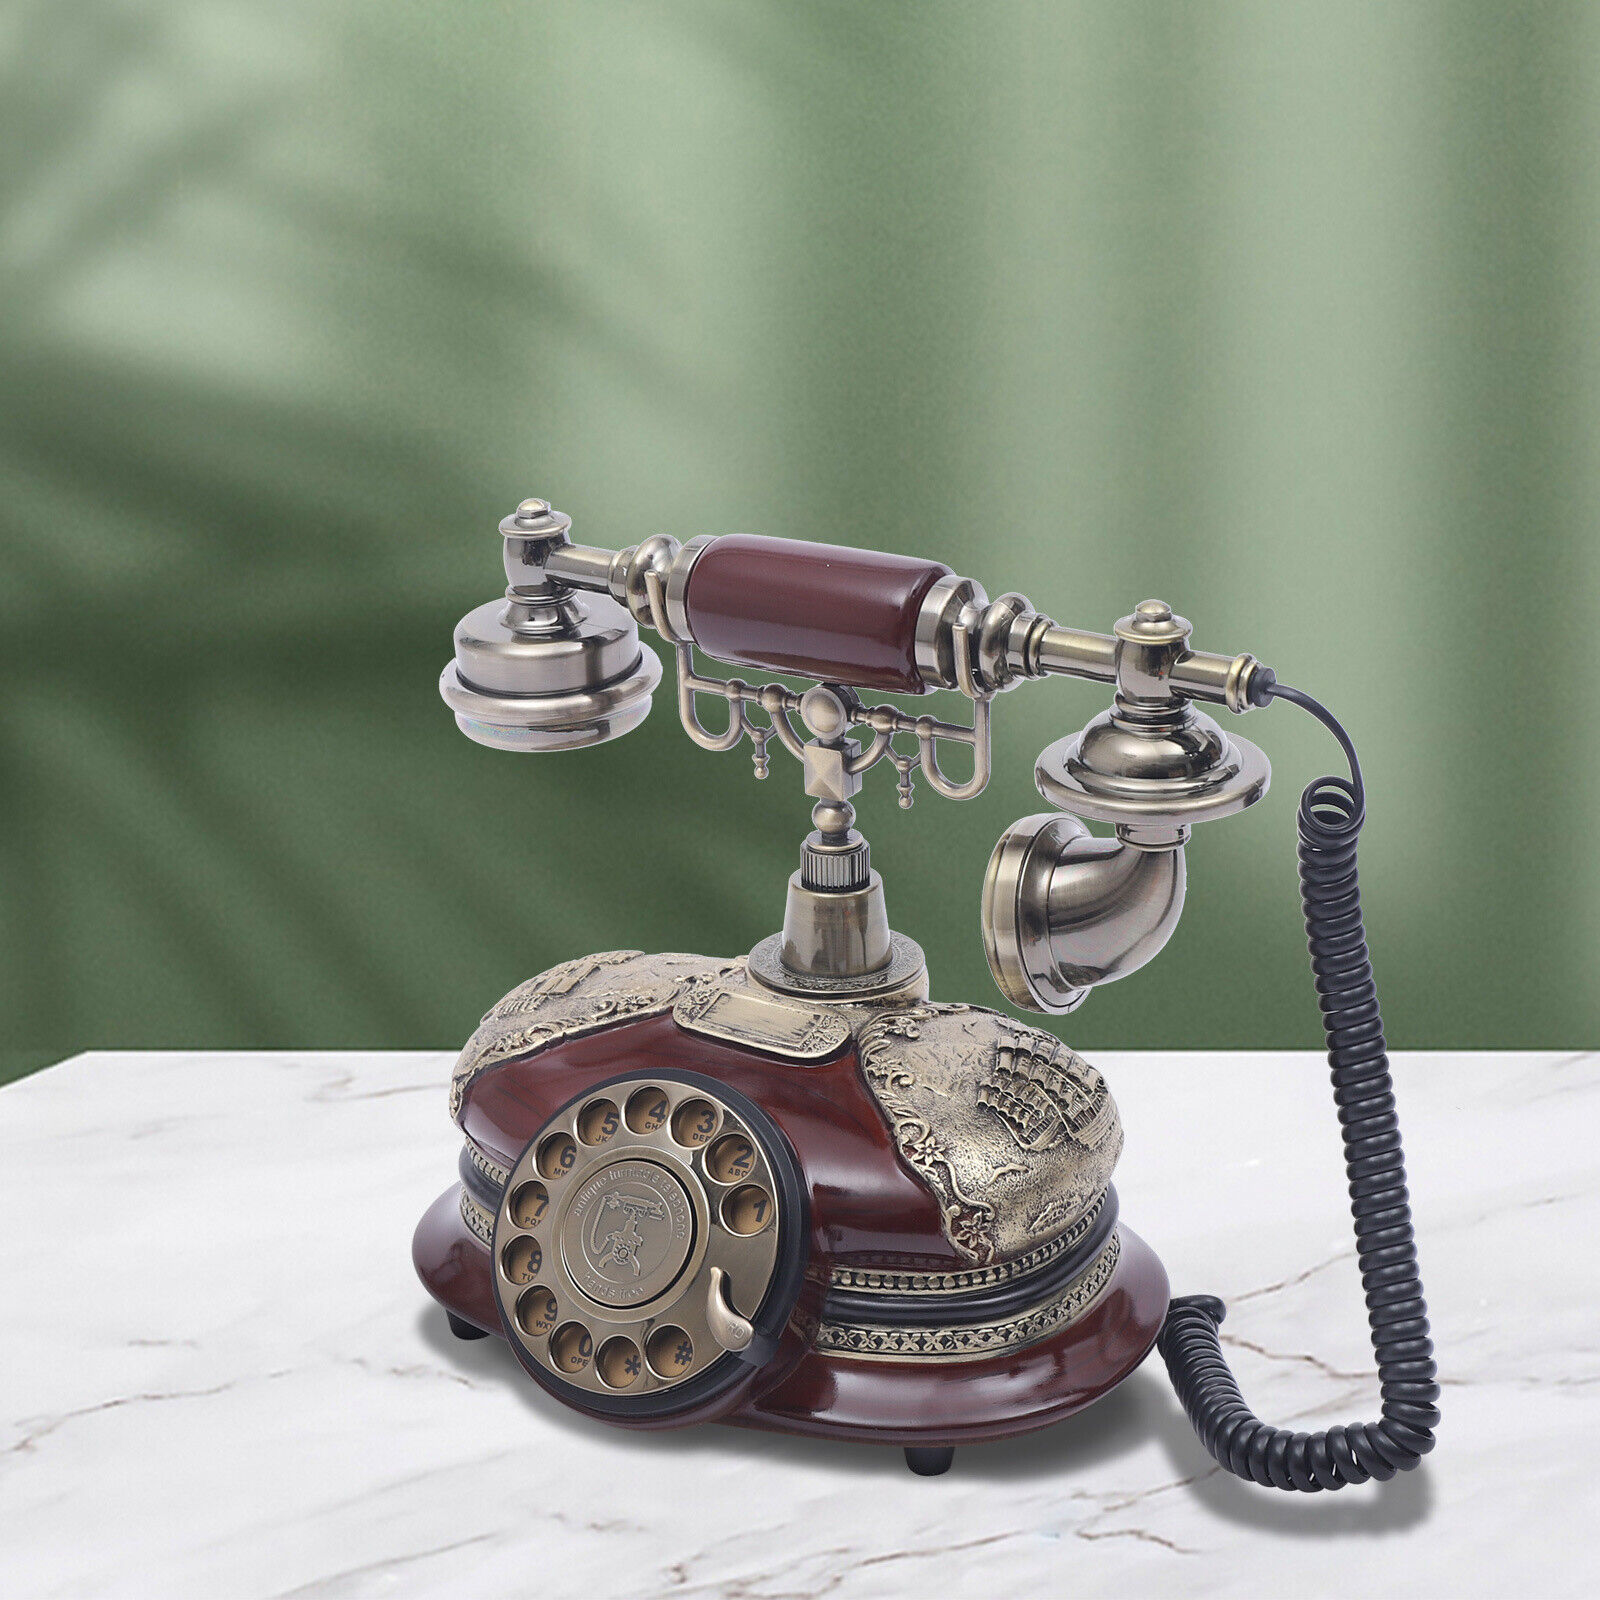 1970s British Old Fashioned Rotary Dial Telephone Retro Landline Phones Working